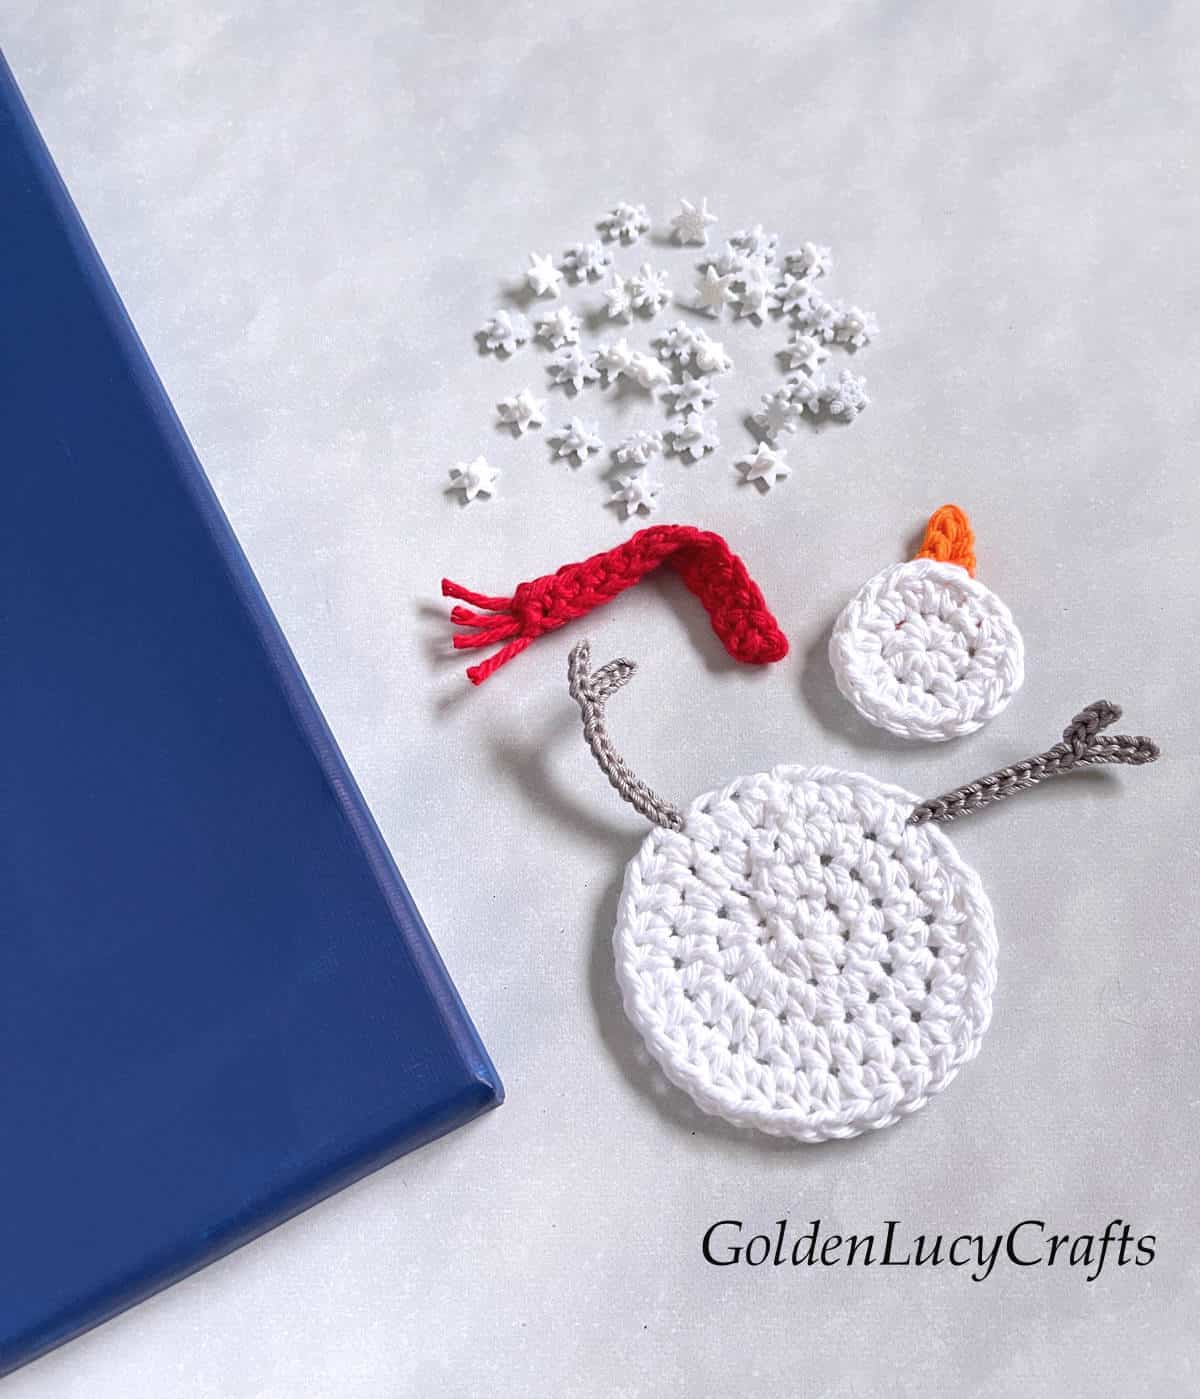 Making crochet wall art snowman catching snowflakes - process shot.